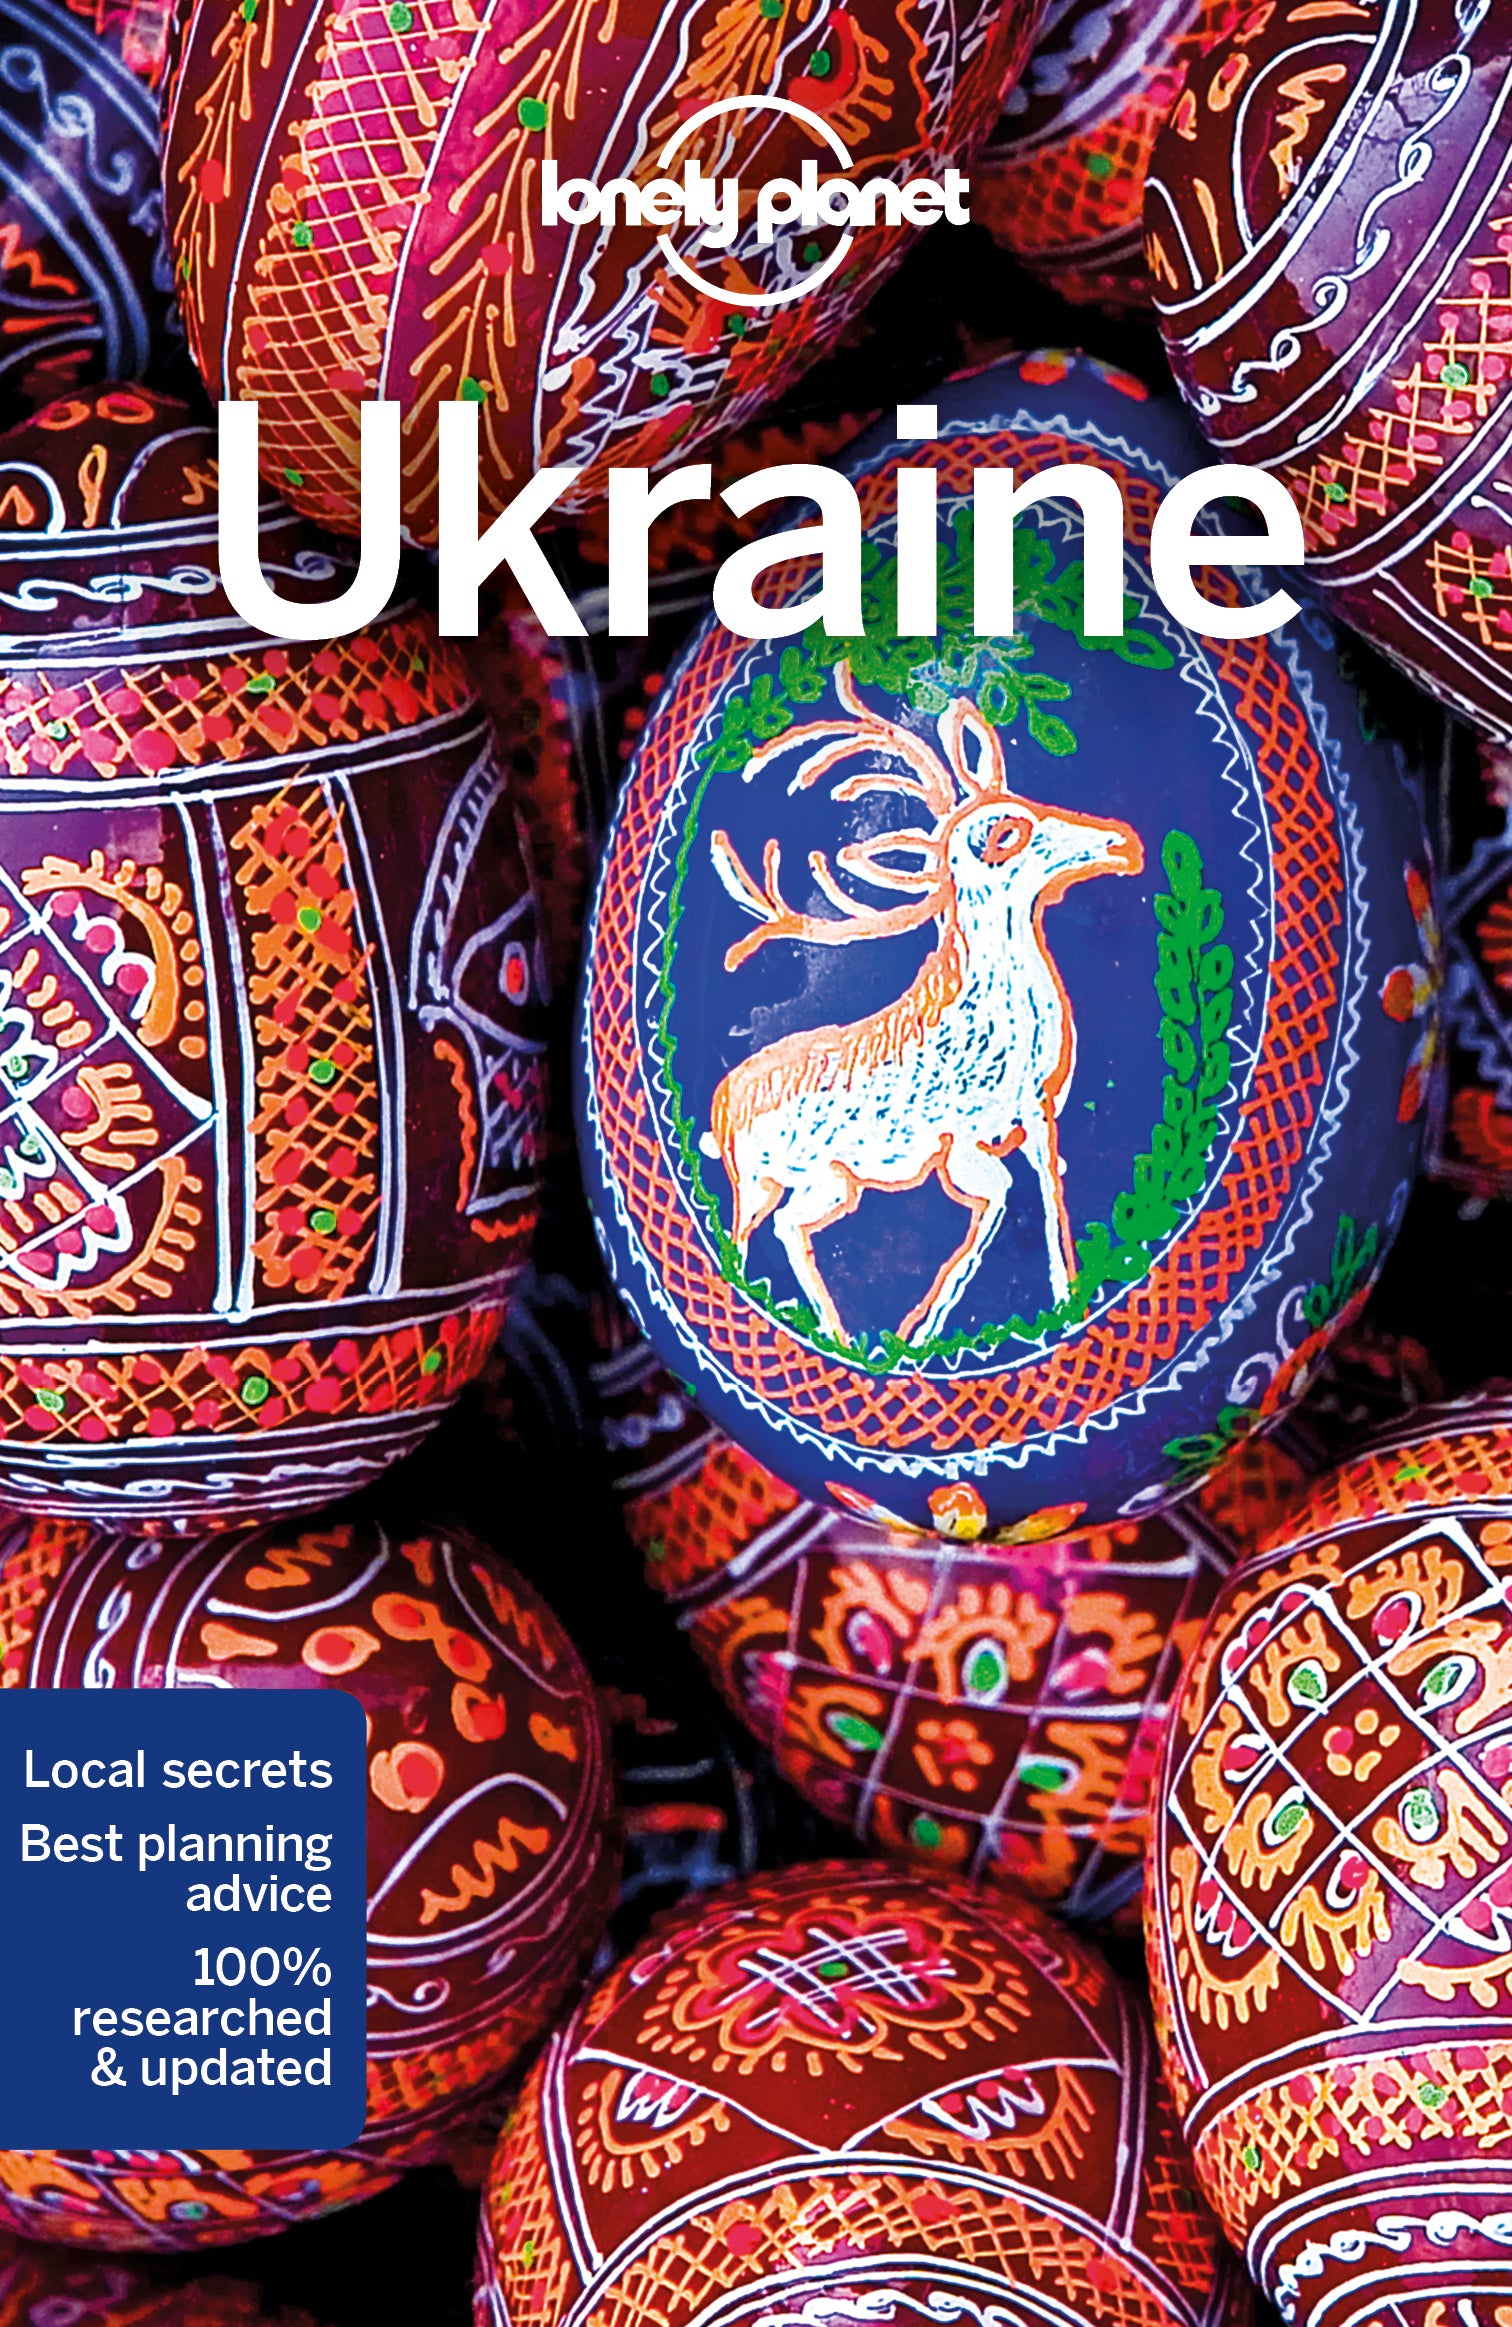 Ukraine travel guide